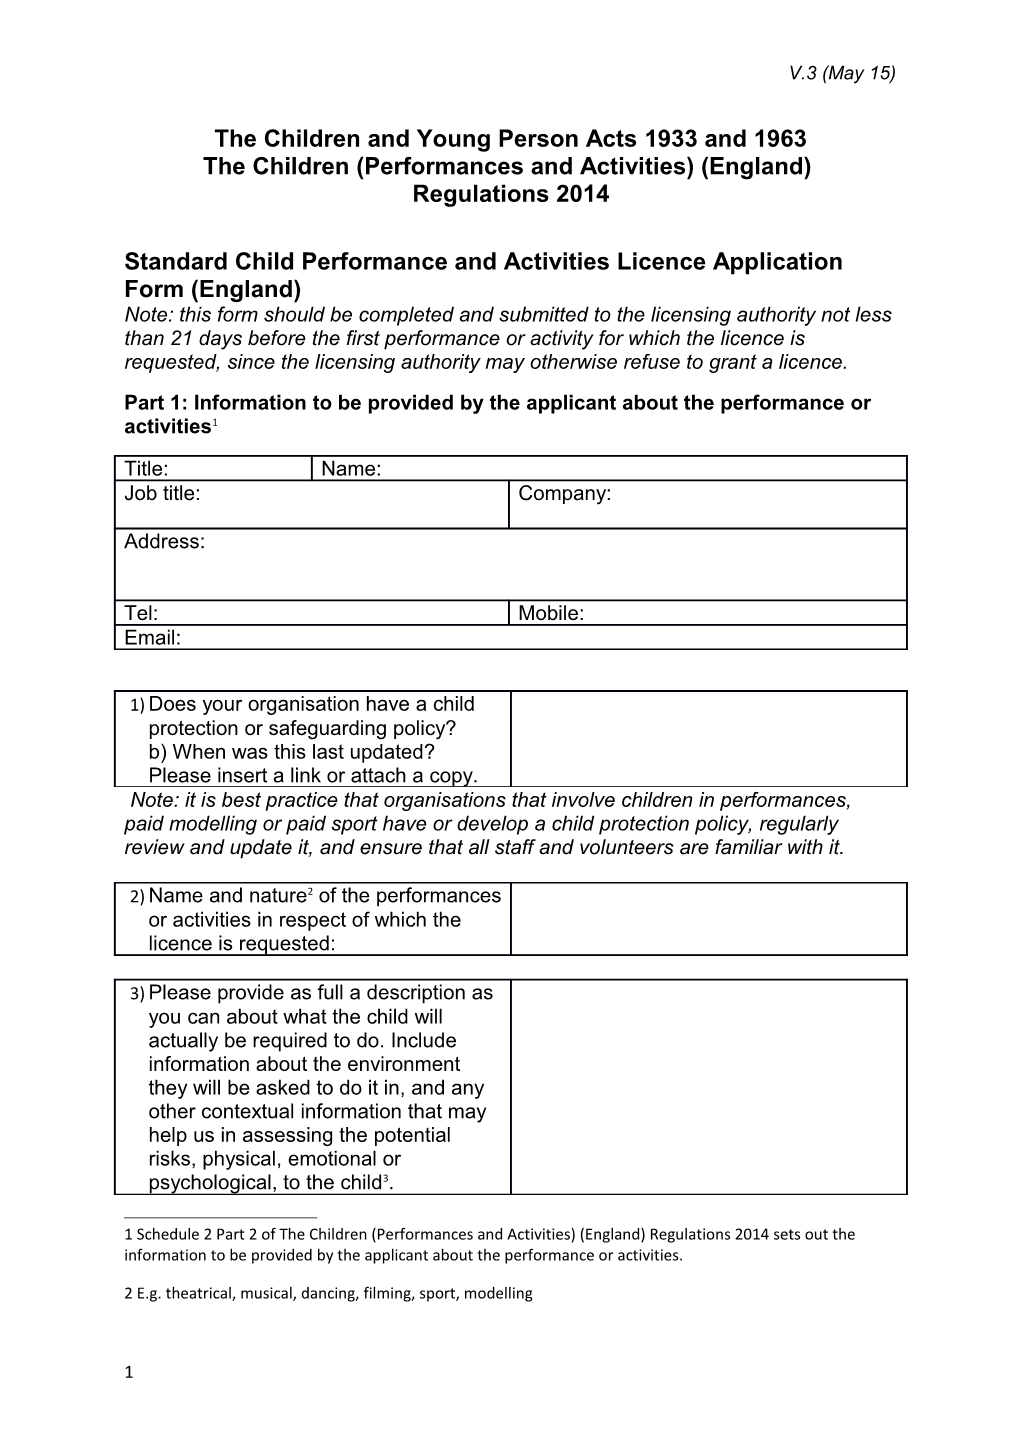 Standard Licence Application Form